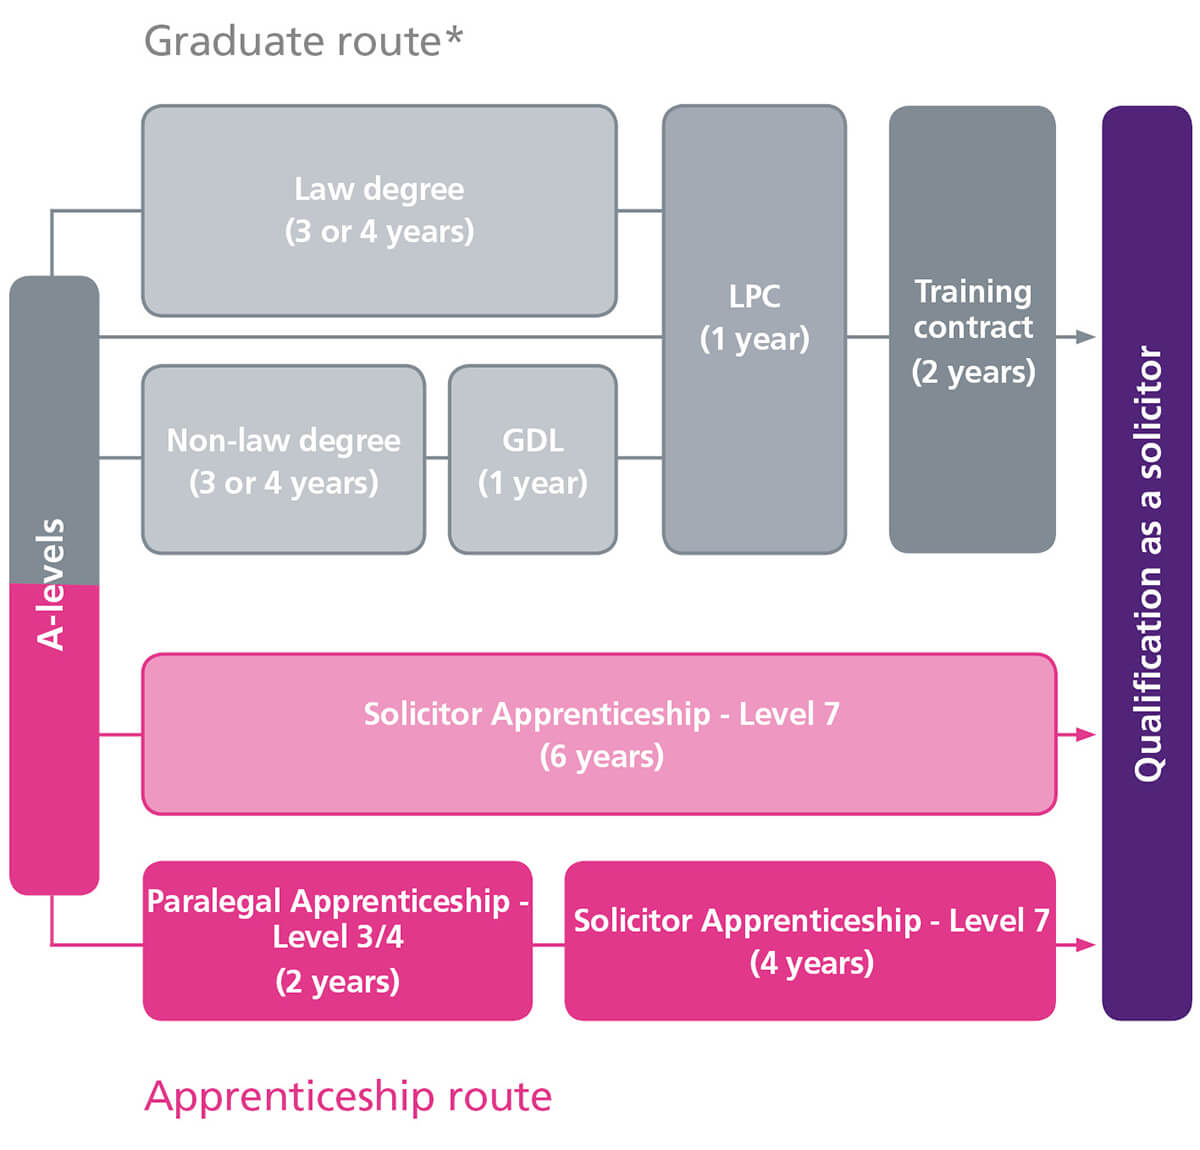 Graduate and apprentice routes